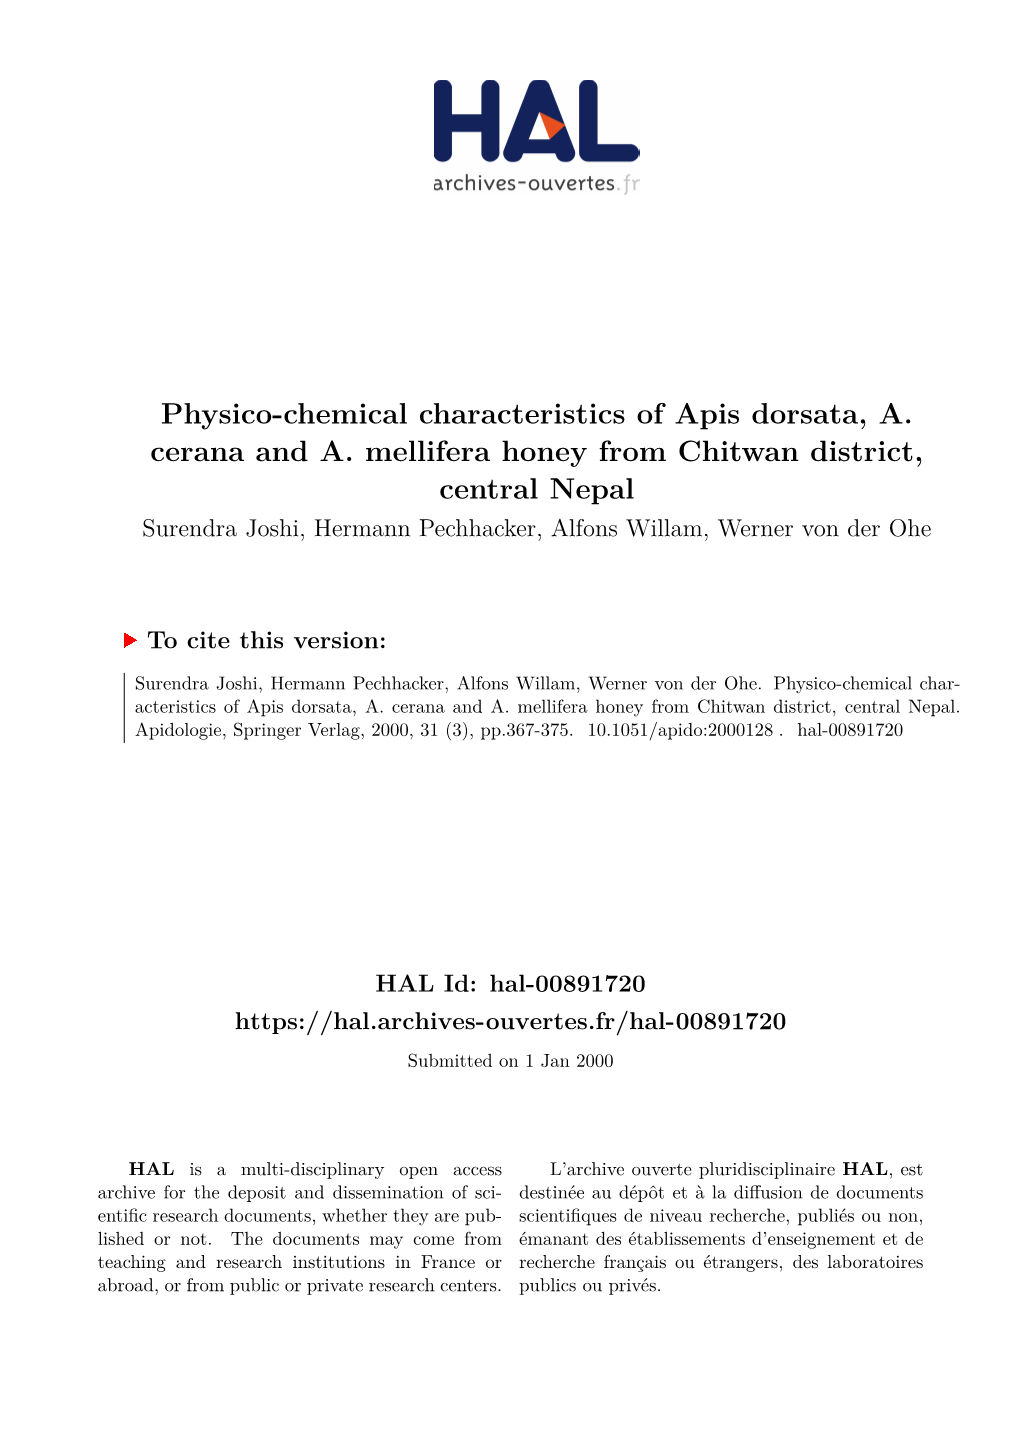 Physico-Chemical Characteristics of Apis Dorsata, A. Cerana and A